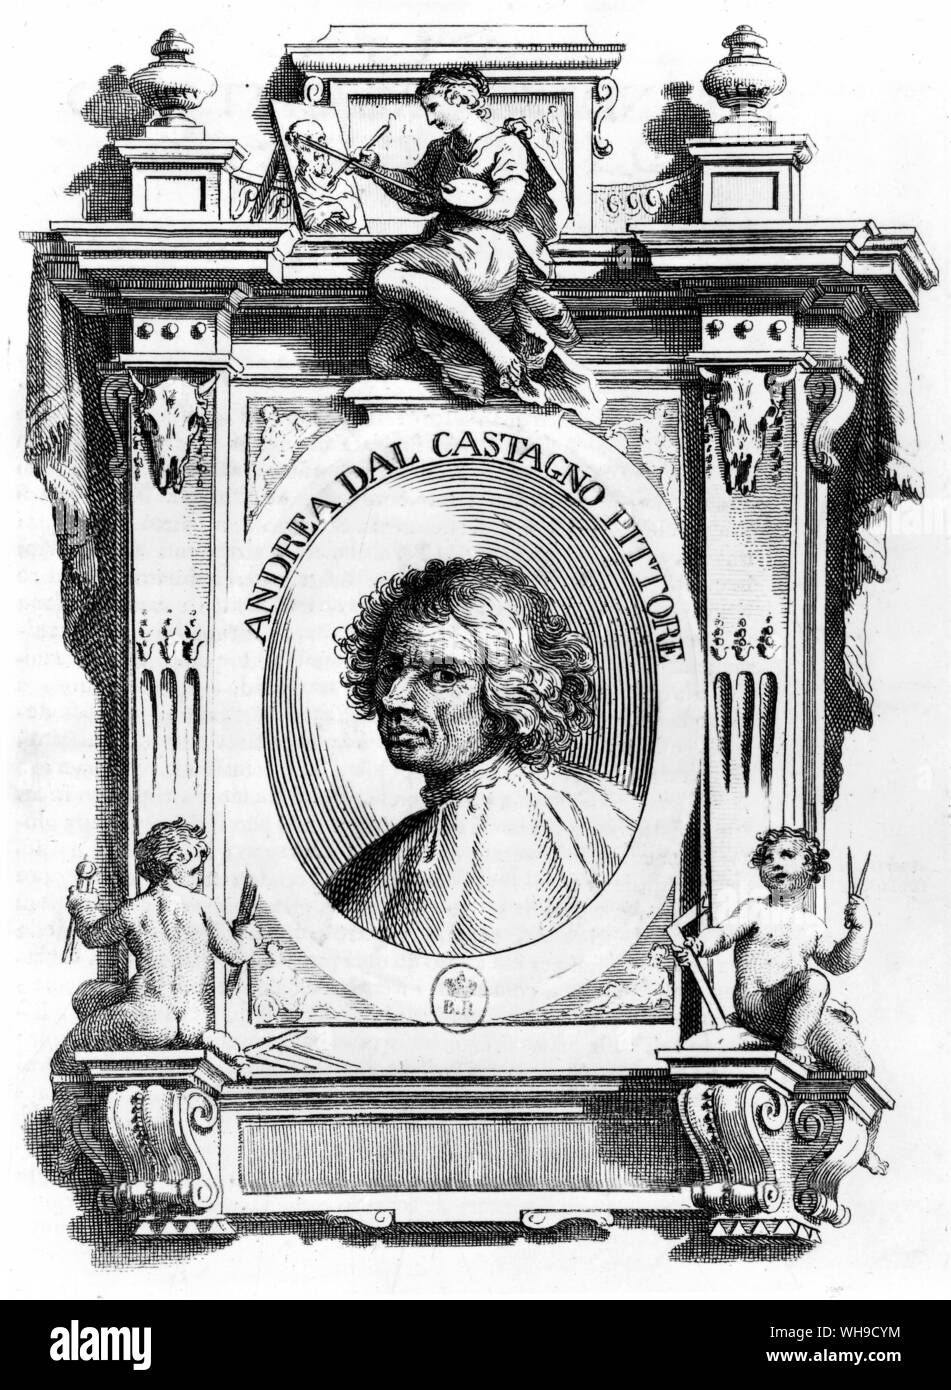 Andrea del Castagno (nom d'emprunt de Andrea di Bartolo de Bargilla) (c.1421-1457). Peintre de la Renaissance italienne. Il a été actif à Florence. Banque D'Images